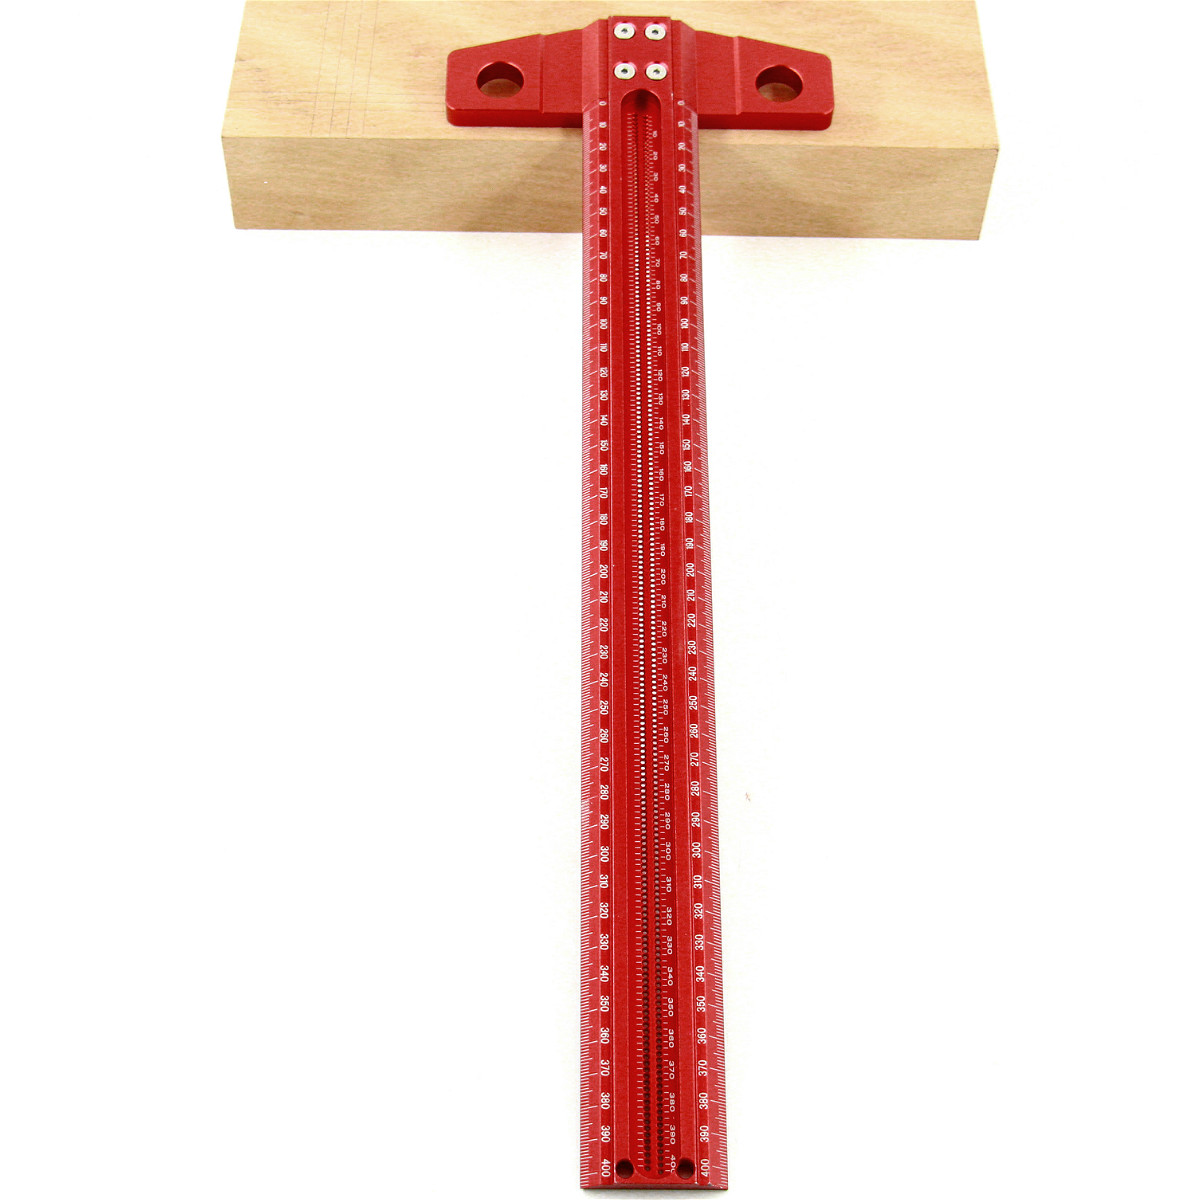 ETOPOO-Woodworking-T-type-Line-Scriber-Hole-Scale-Ruler-Aluminum-Alloy-Marking-Gauge-Crossed-Line-Sc-1798711-10